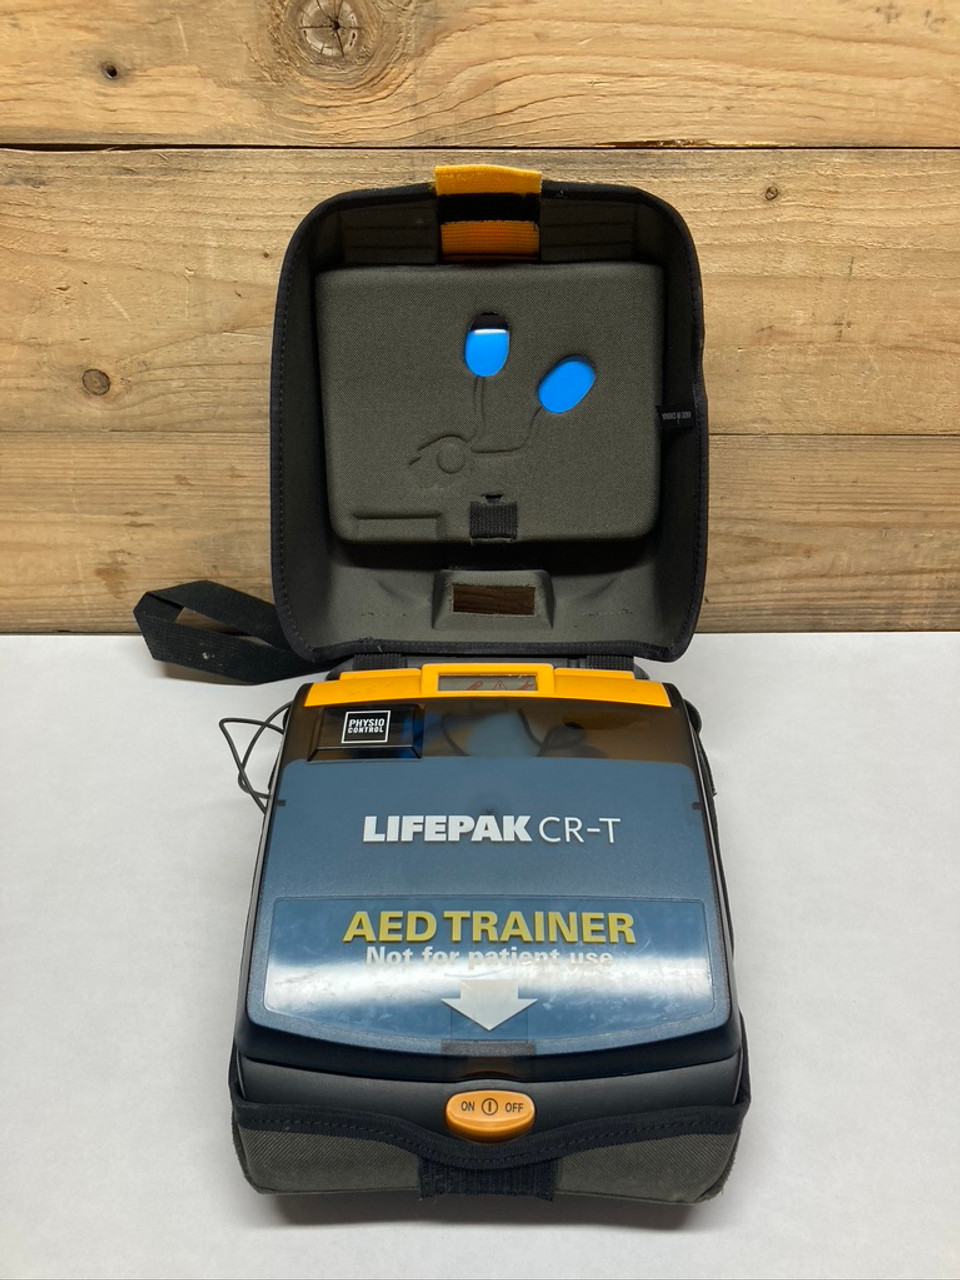 Lifepak CR-T AED Trainer 3201804 Physio-Control SN 06869 B-010